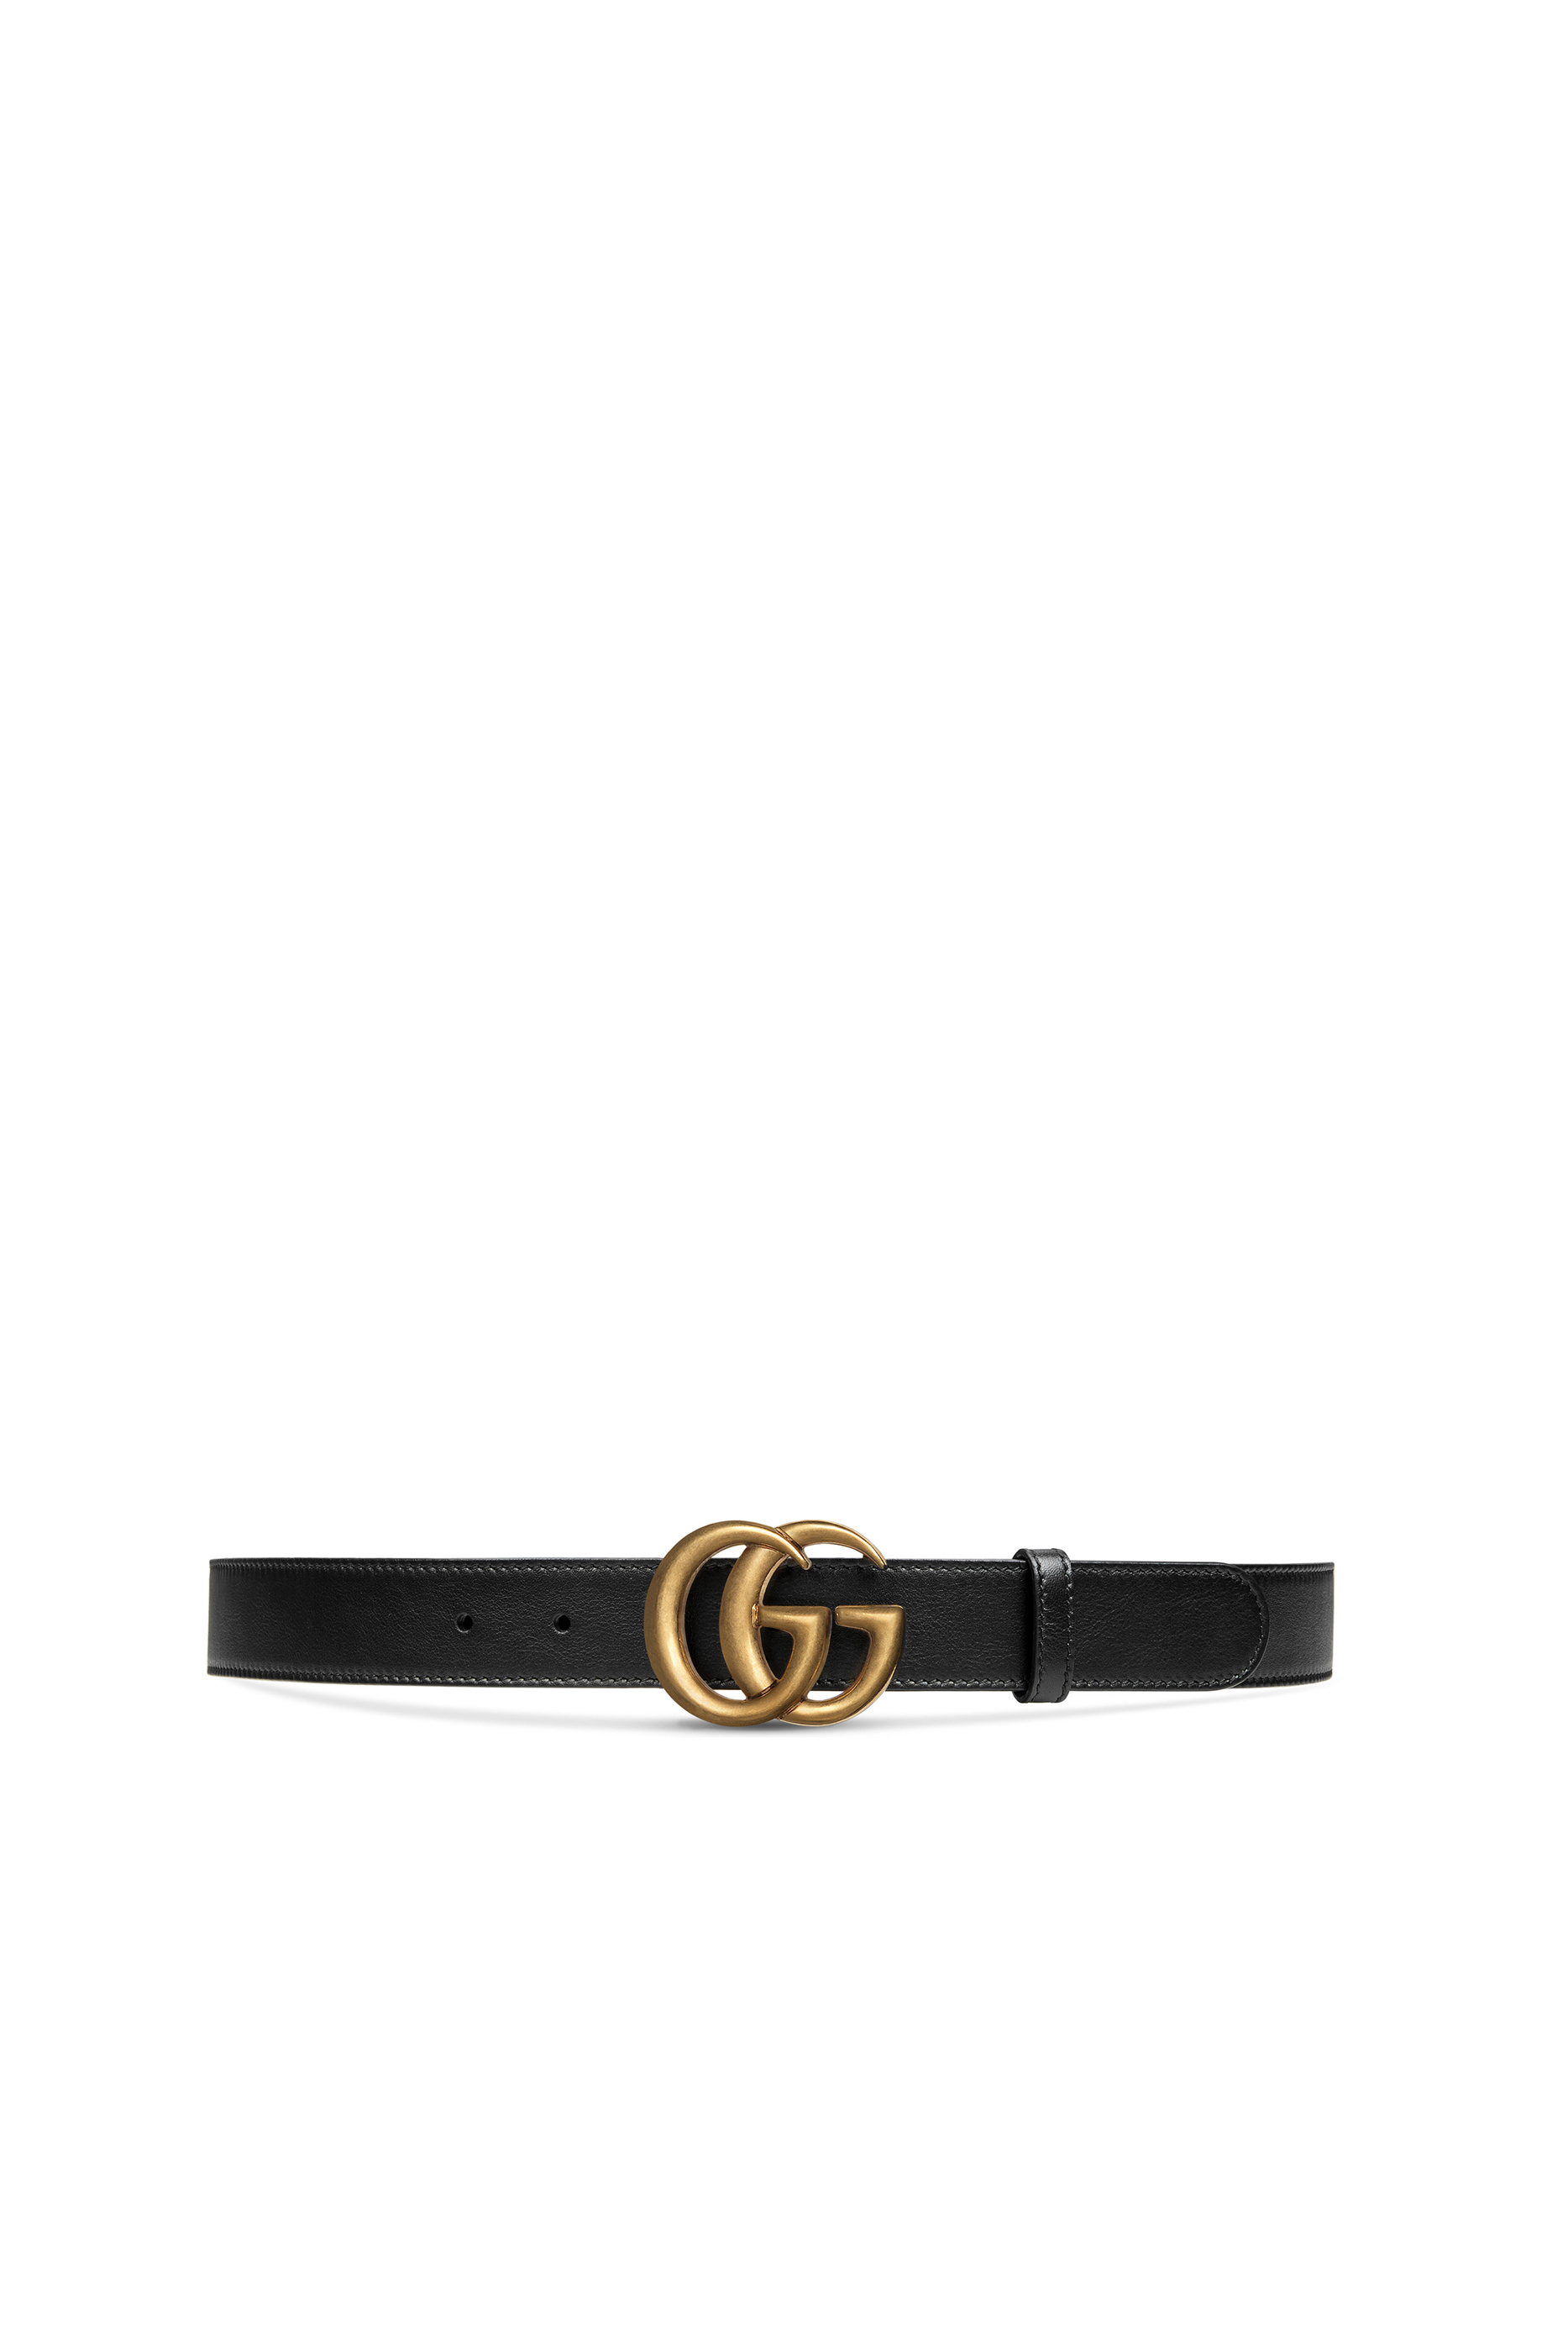 gucci girl belt